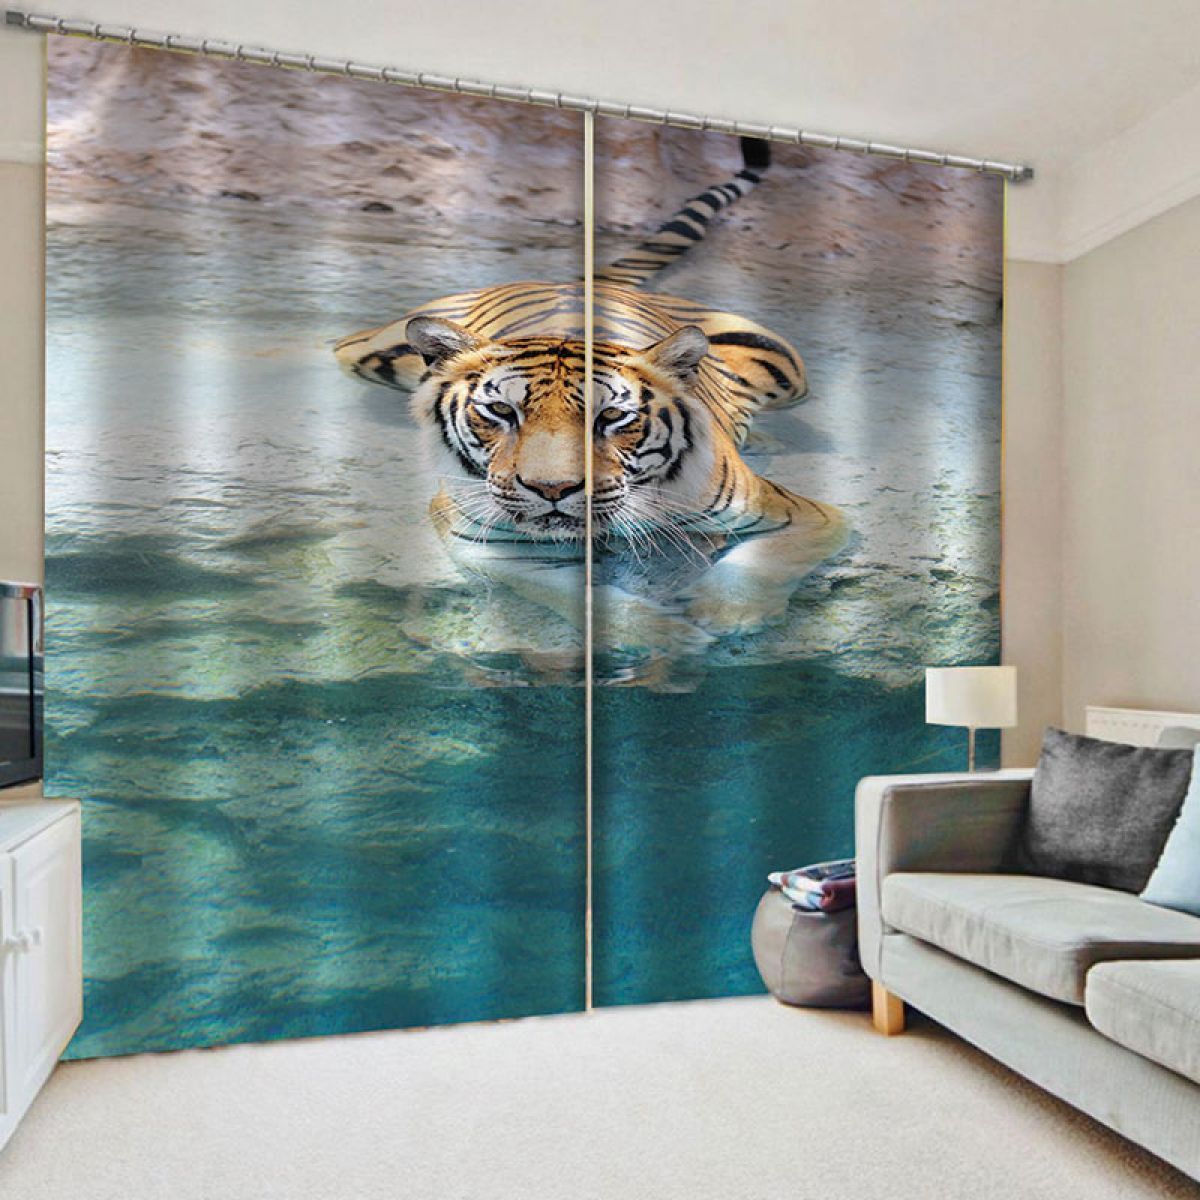 Swimming Tiger Printed Window Curtain Home Decor